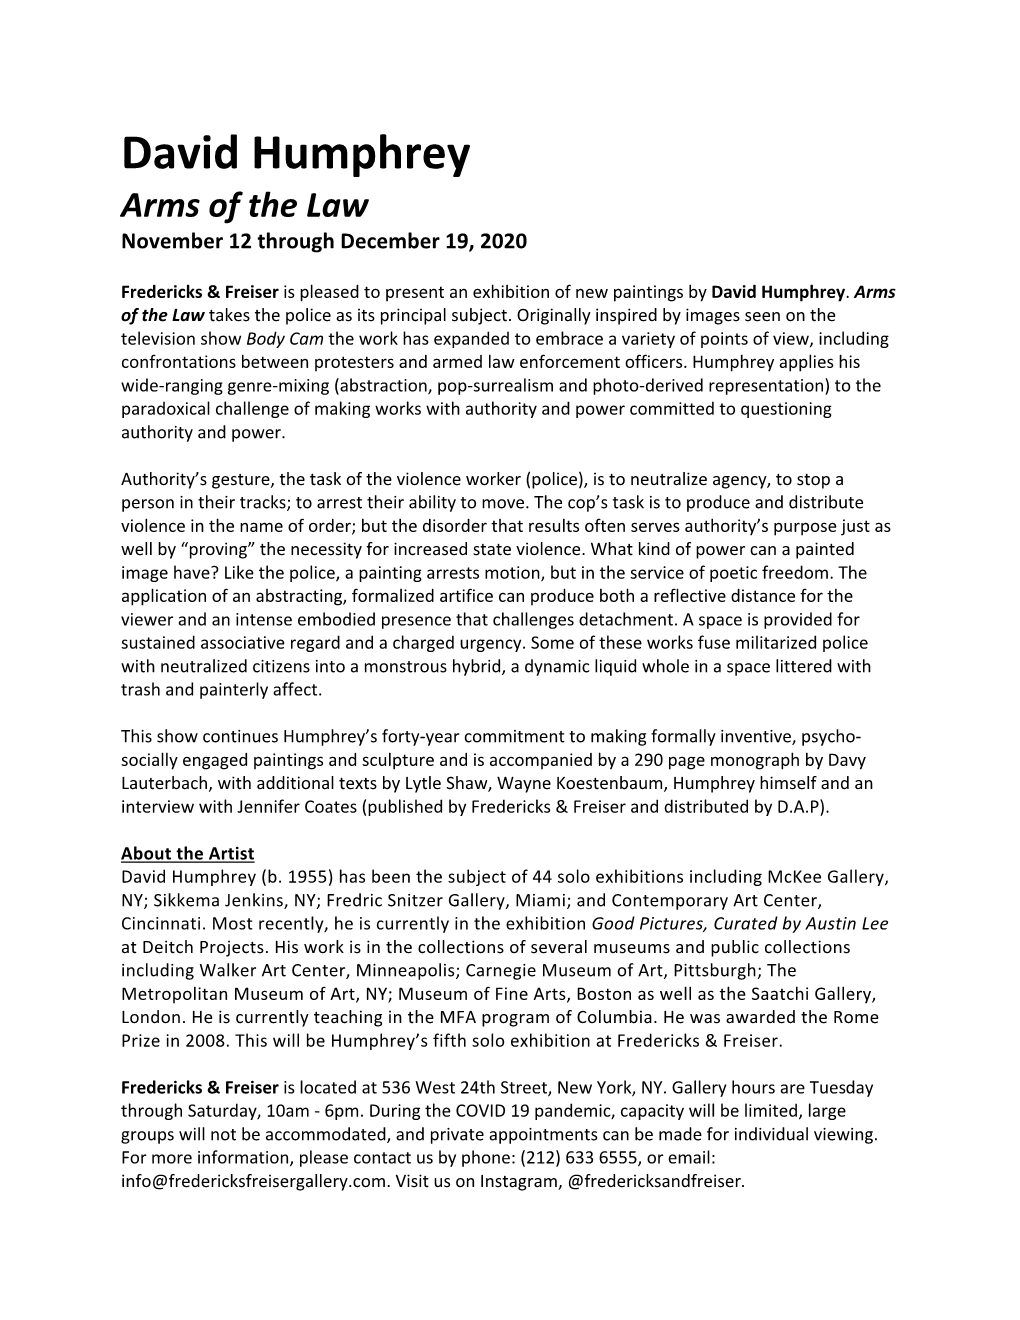 David Humphrey Arms of the Law November 12 Through December 19, 2020